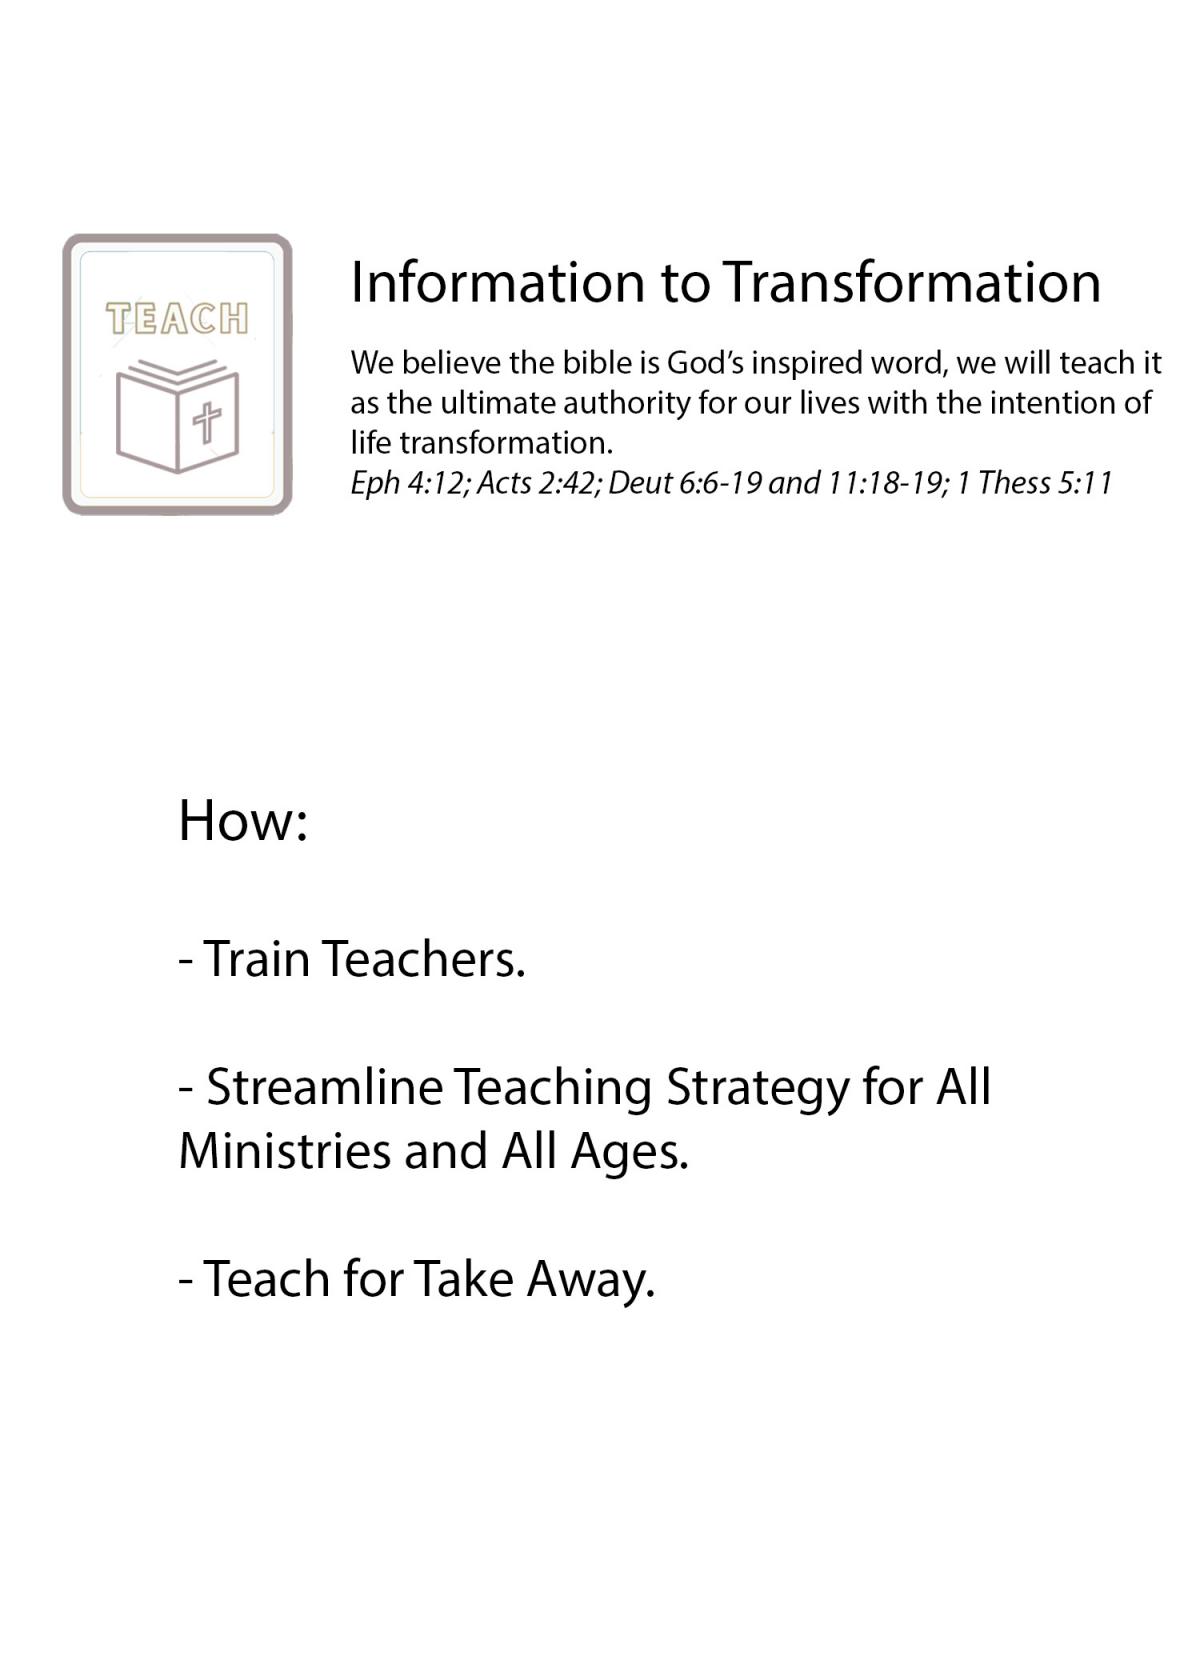 Teach info graphic 2.jpg